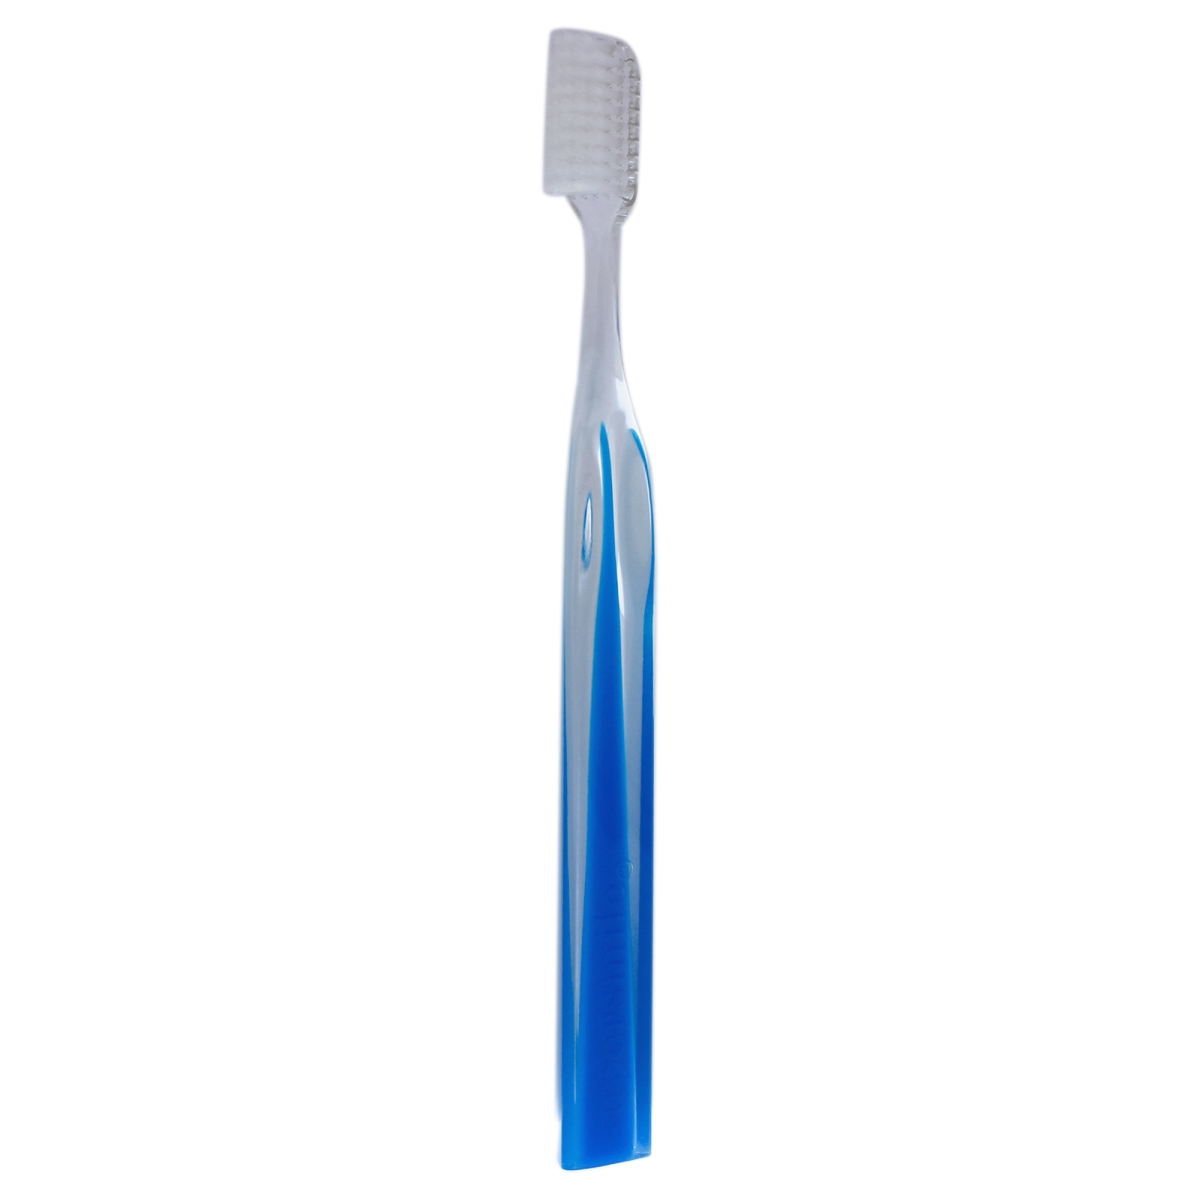 I0085422 45 Angled Crystal Collection Toothbrush